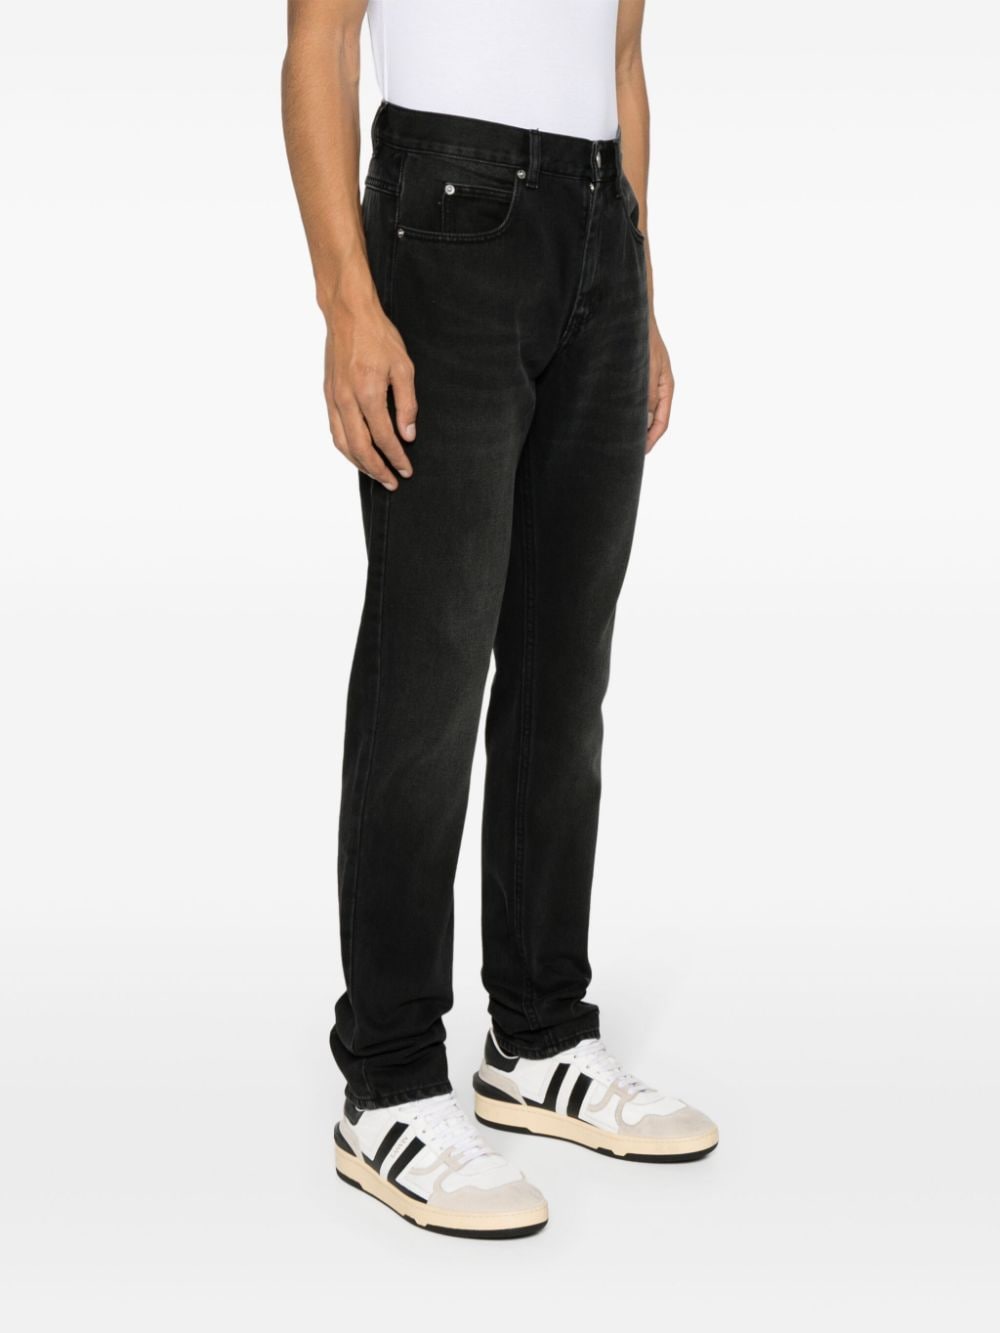 MARANT Jack ribfluwelen jeans Zwart